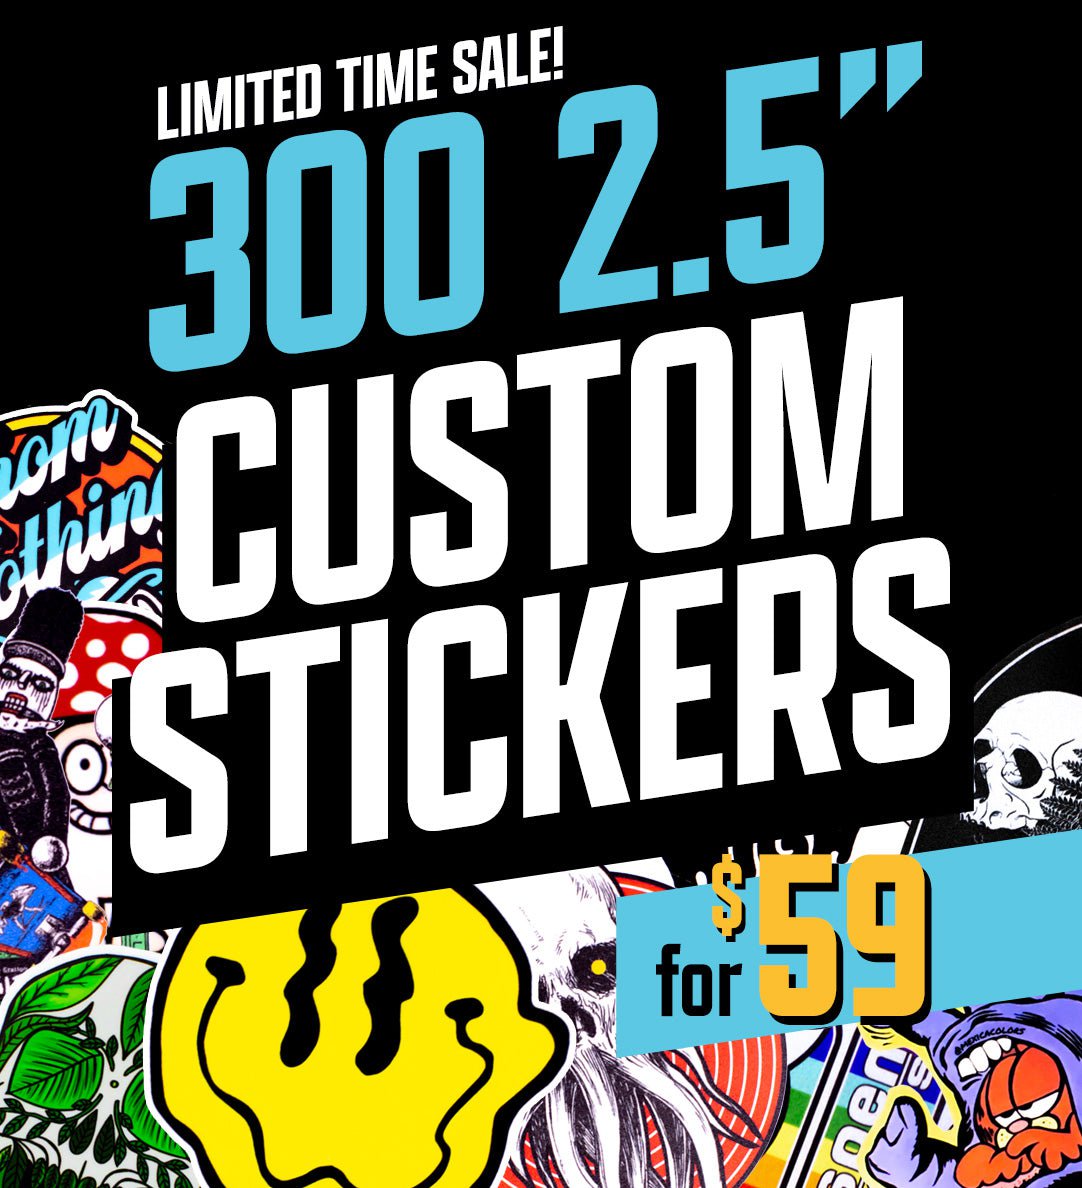 Custom vinyl stickers promotional graphic